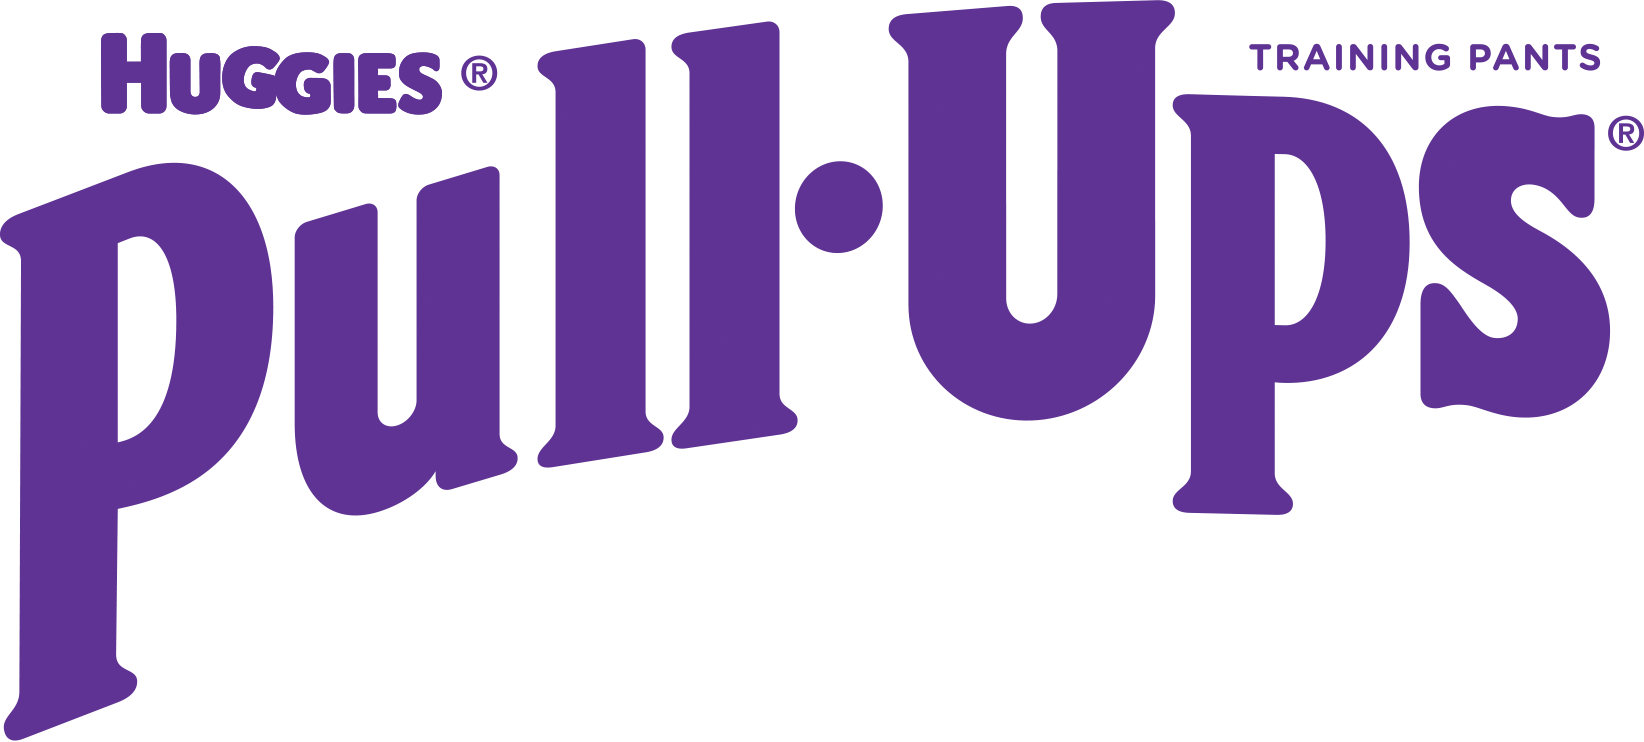 pullups logo.png